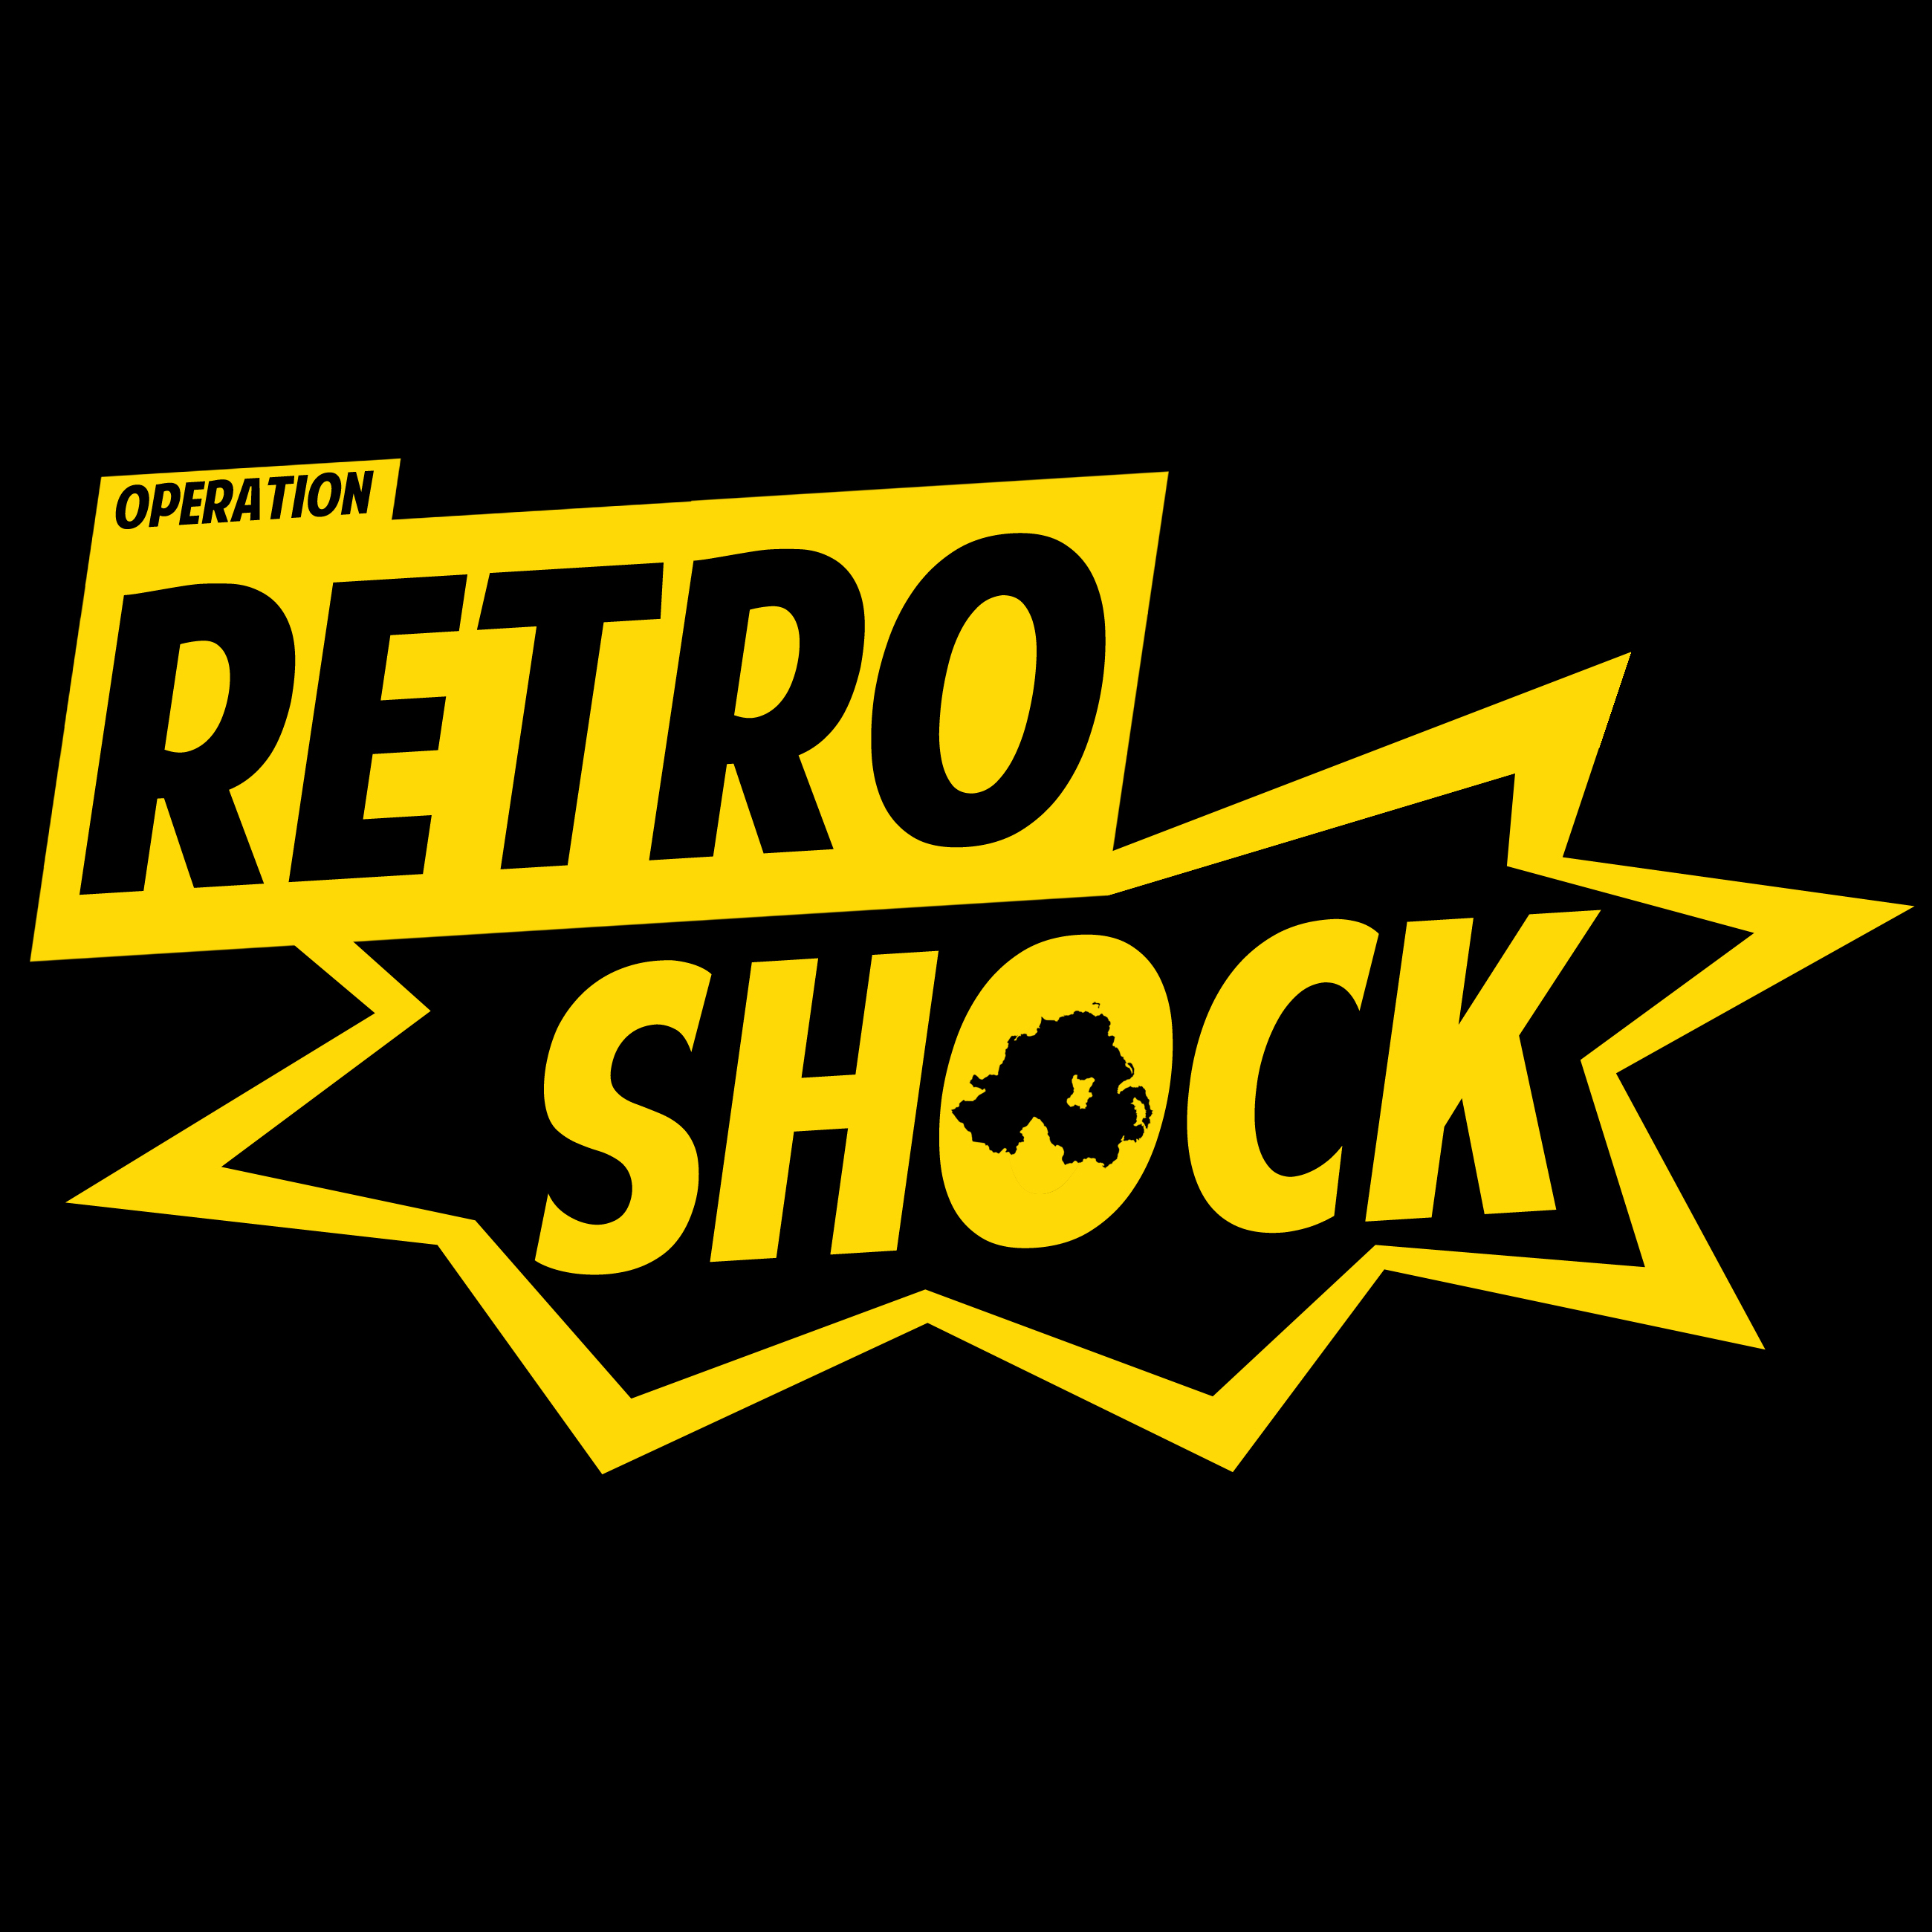 Operation Retroshock - Summer 2018 PSA #2 (Retroshock Returns on the 27th August) & From The Vault)